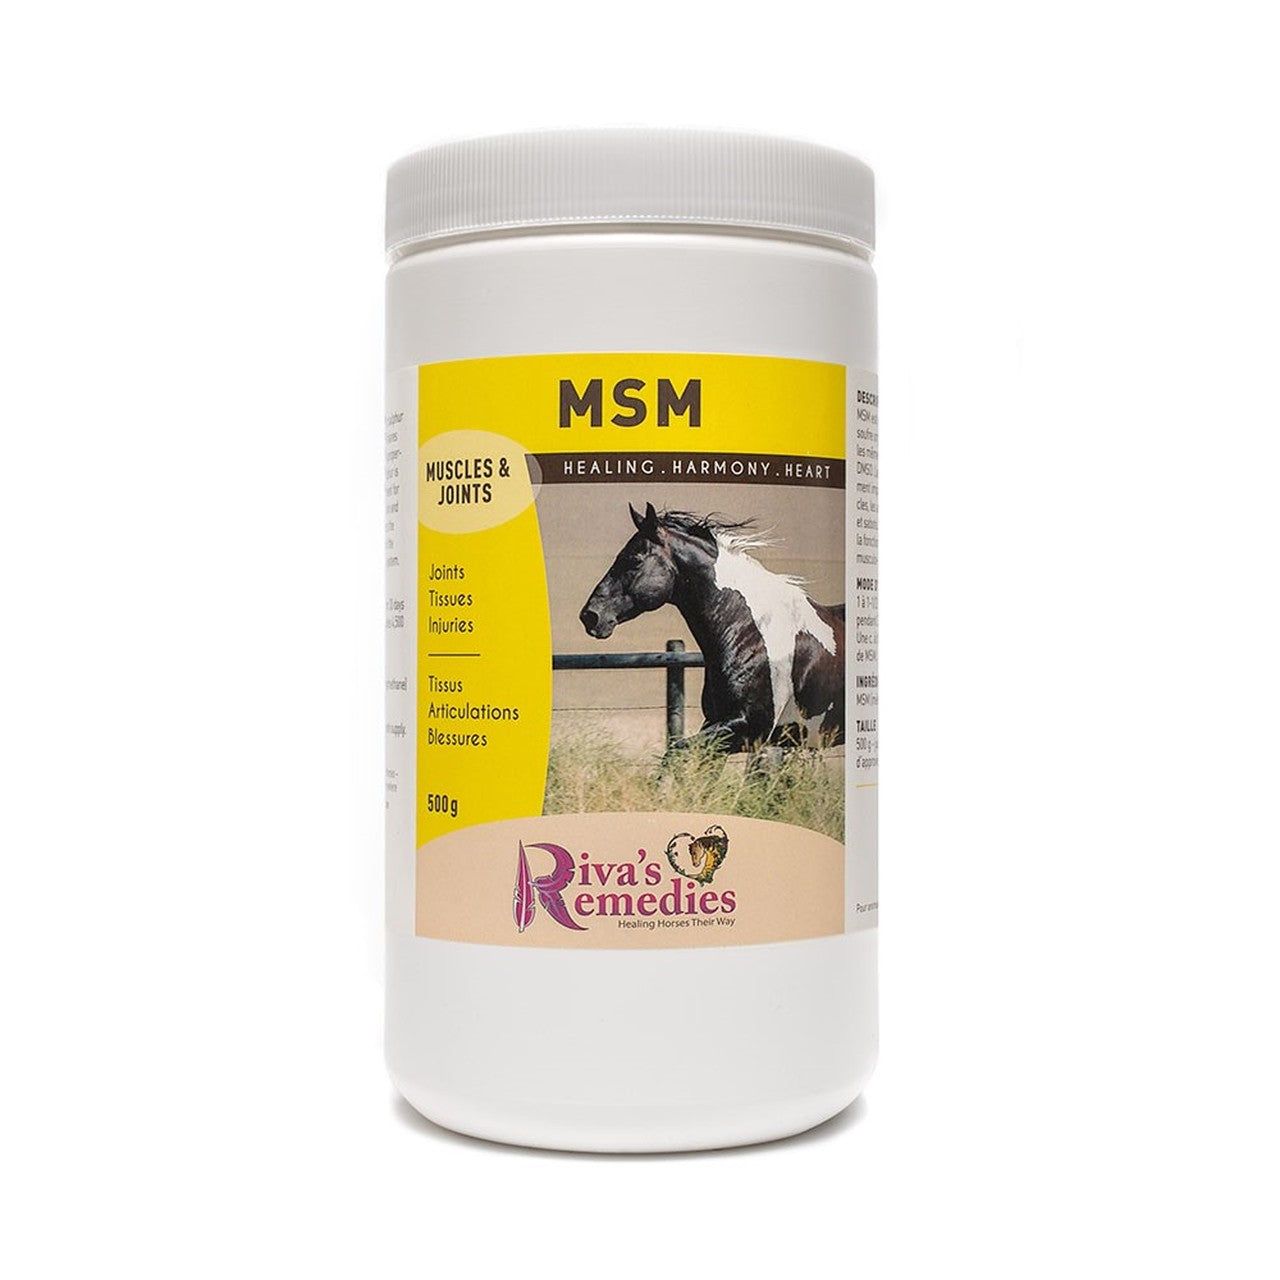 Riva's Remedies Equine MSM - 1kg